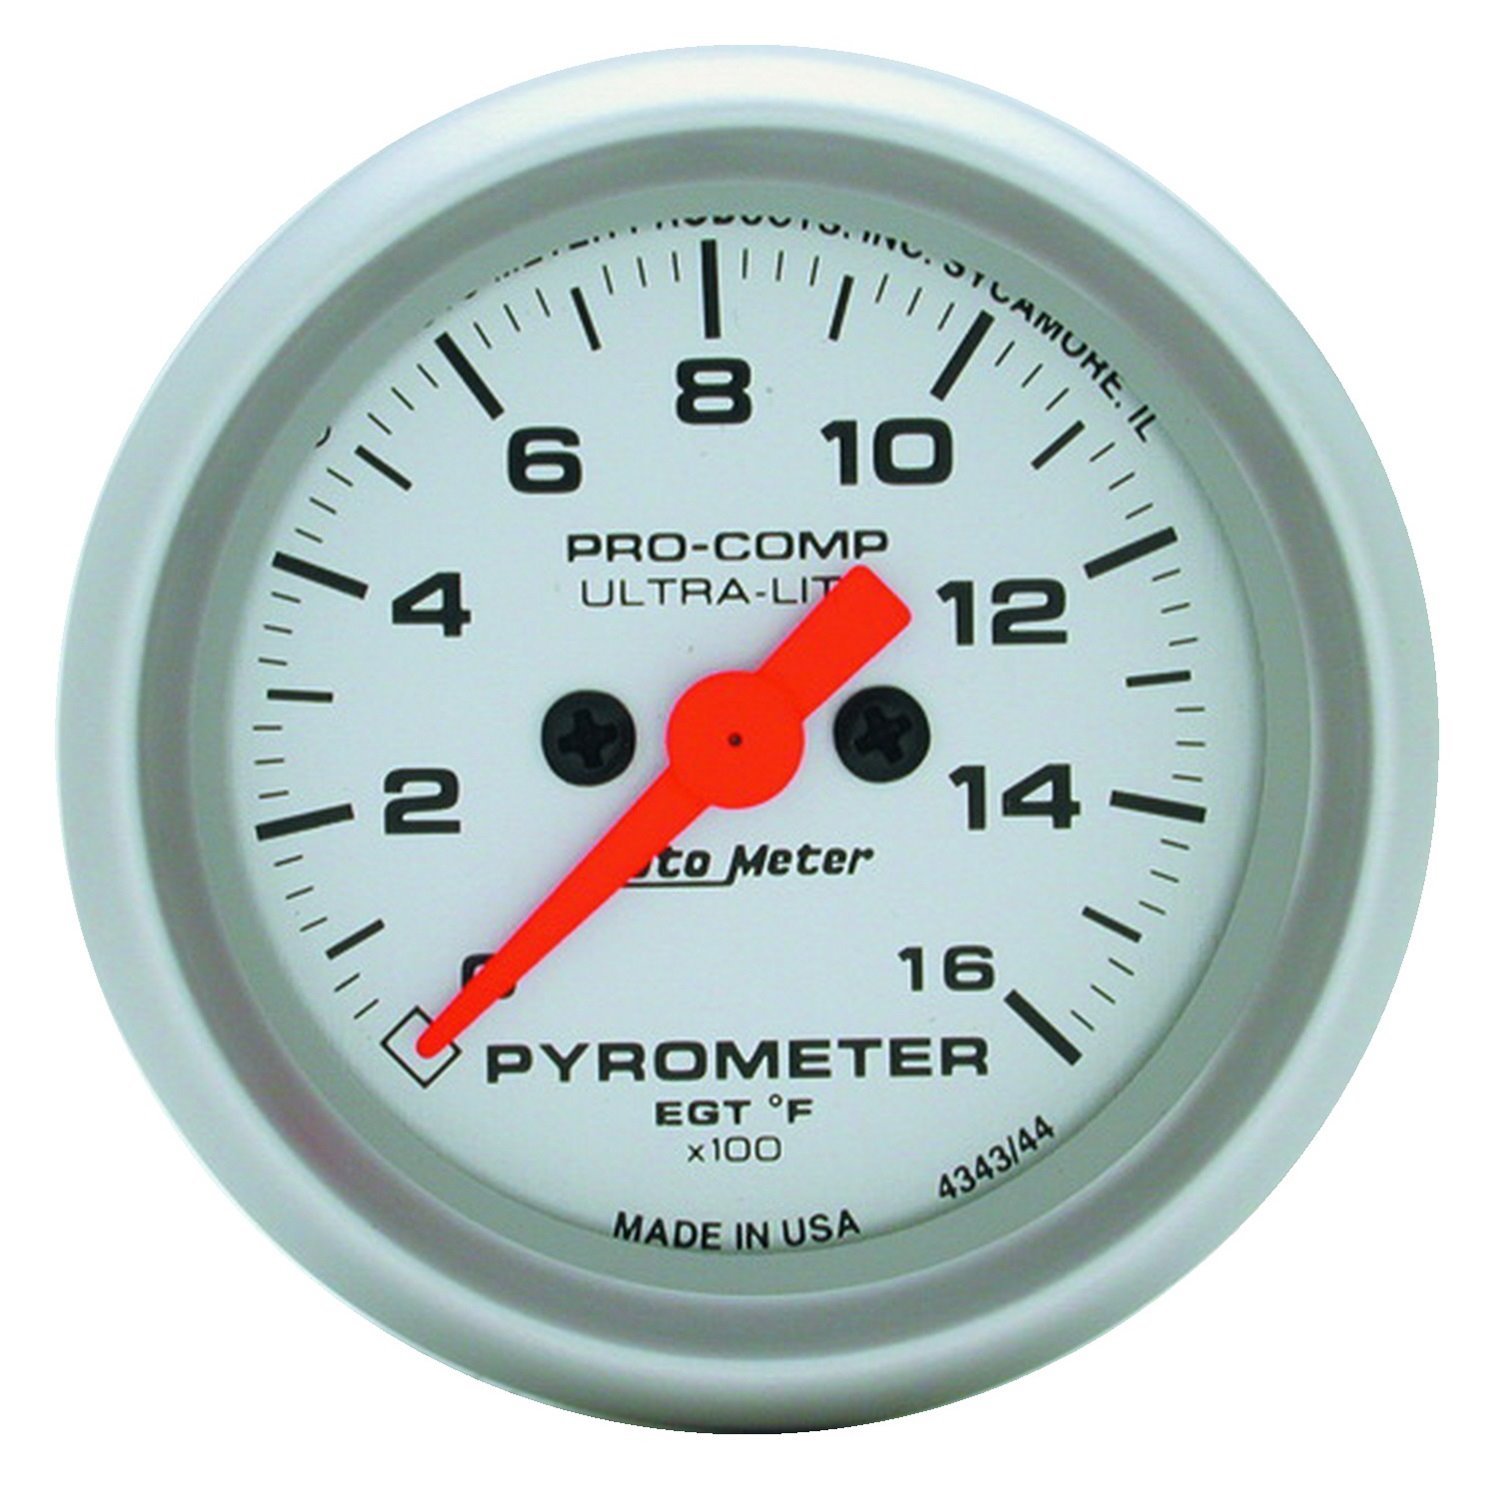 Ultra-Lite Pyrometer 2-1/16" electrical